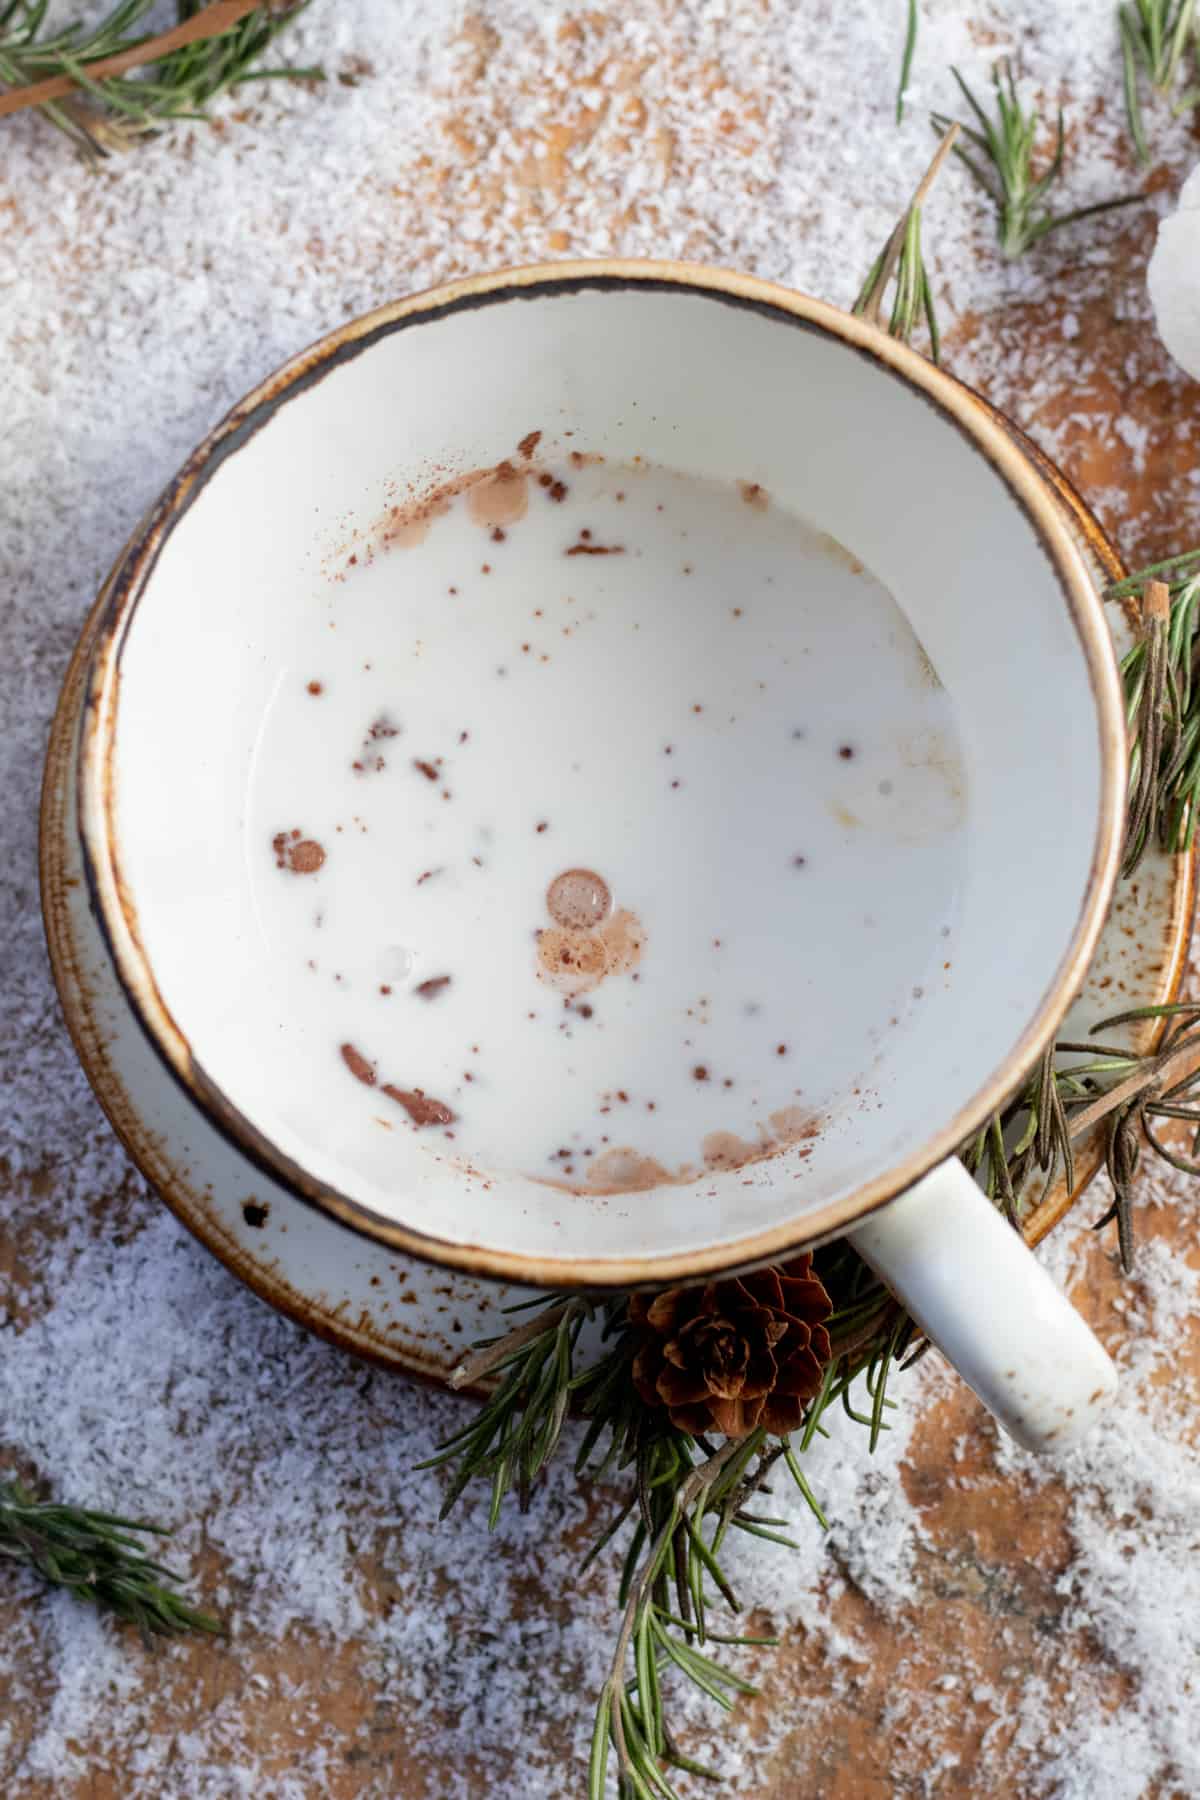 Add coconut milk to mug to add extra creaminess.